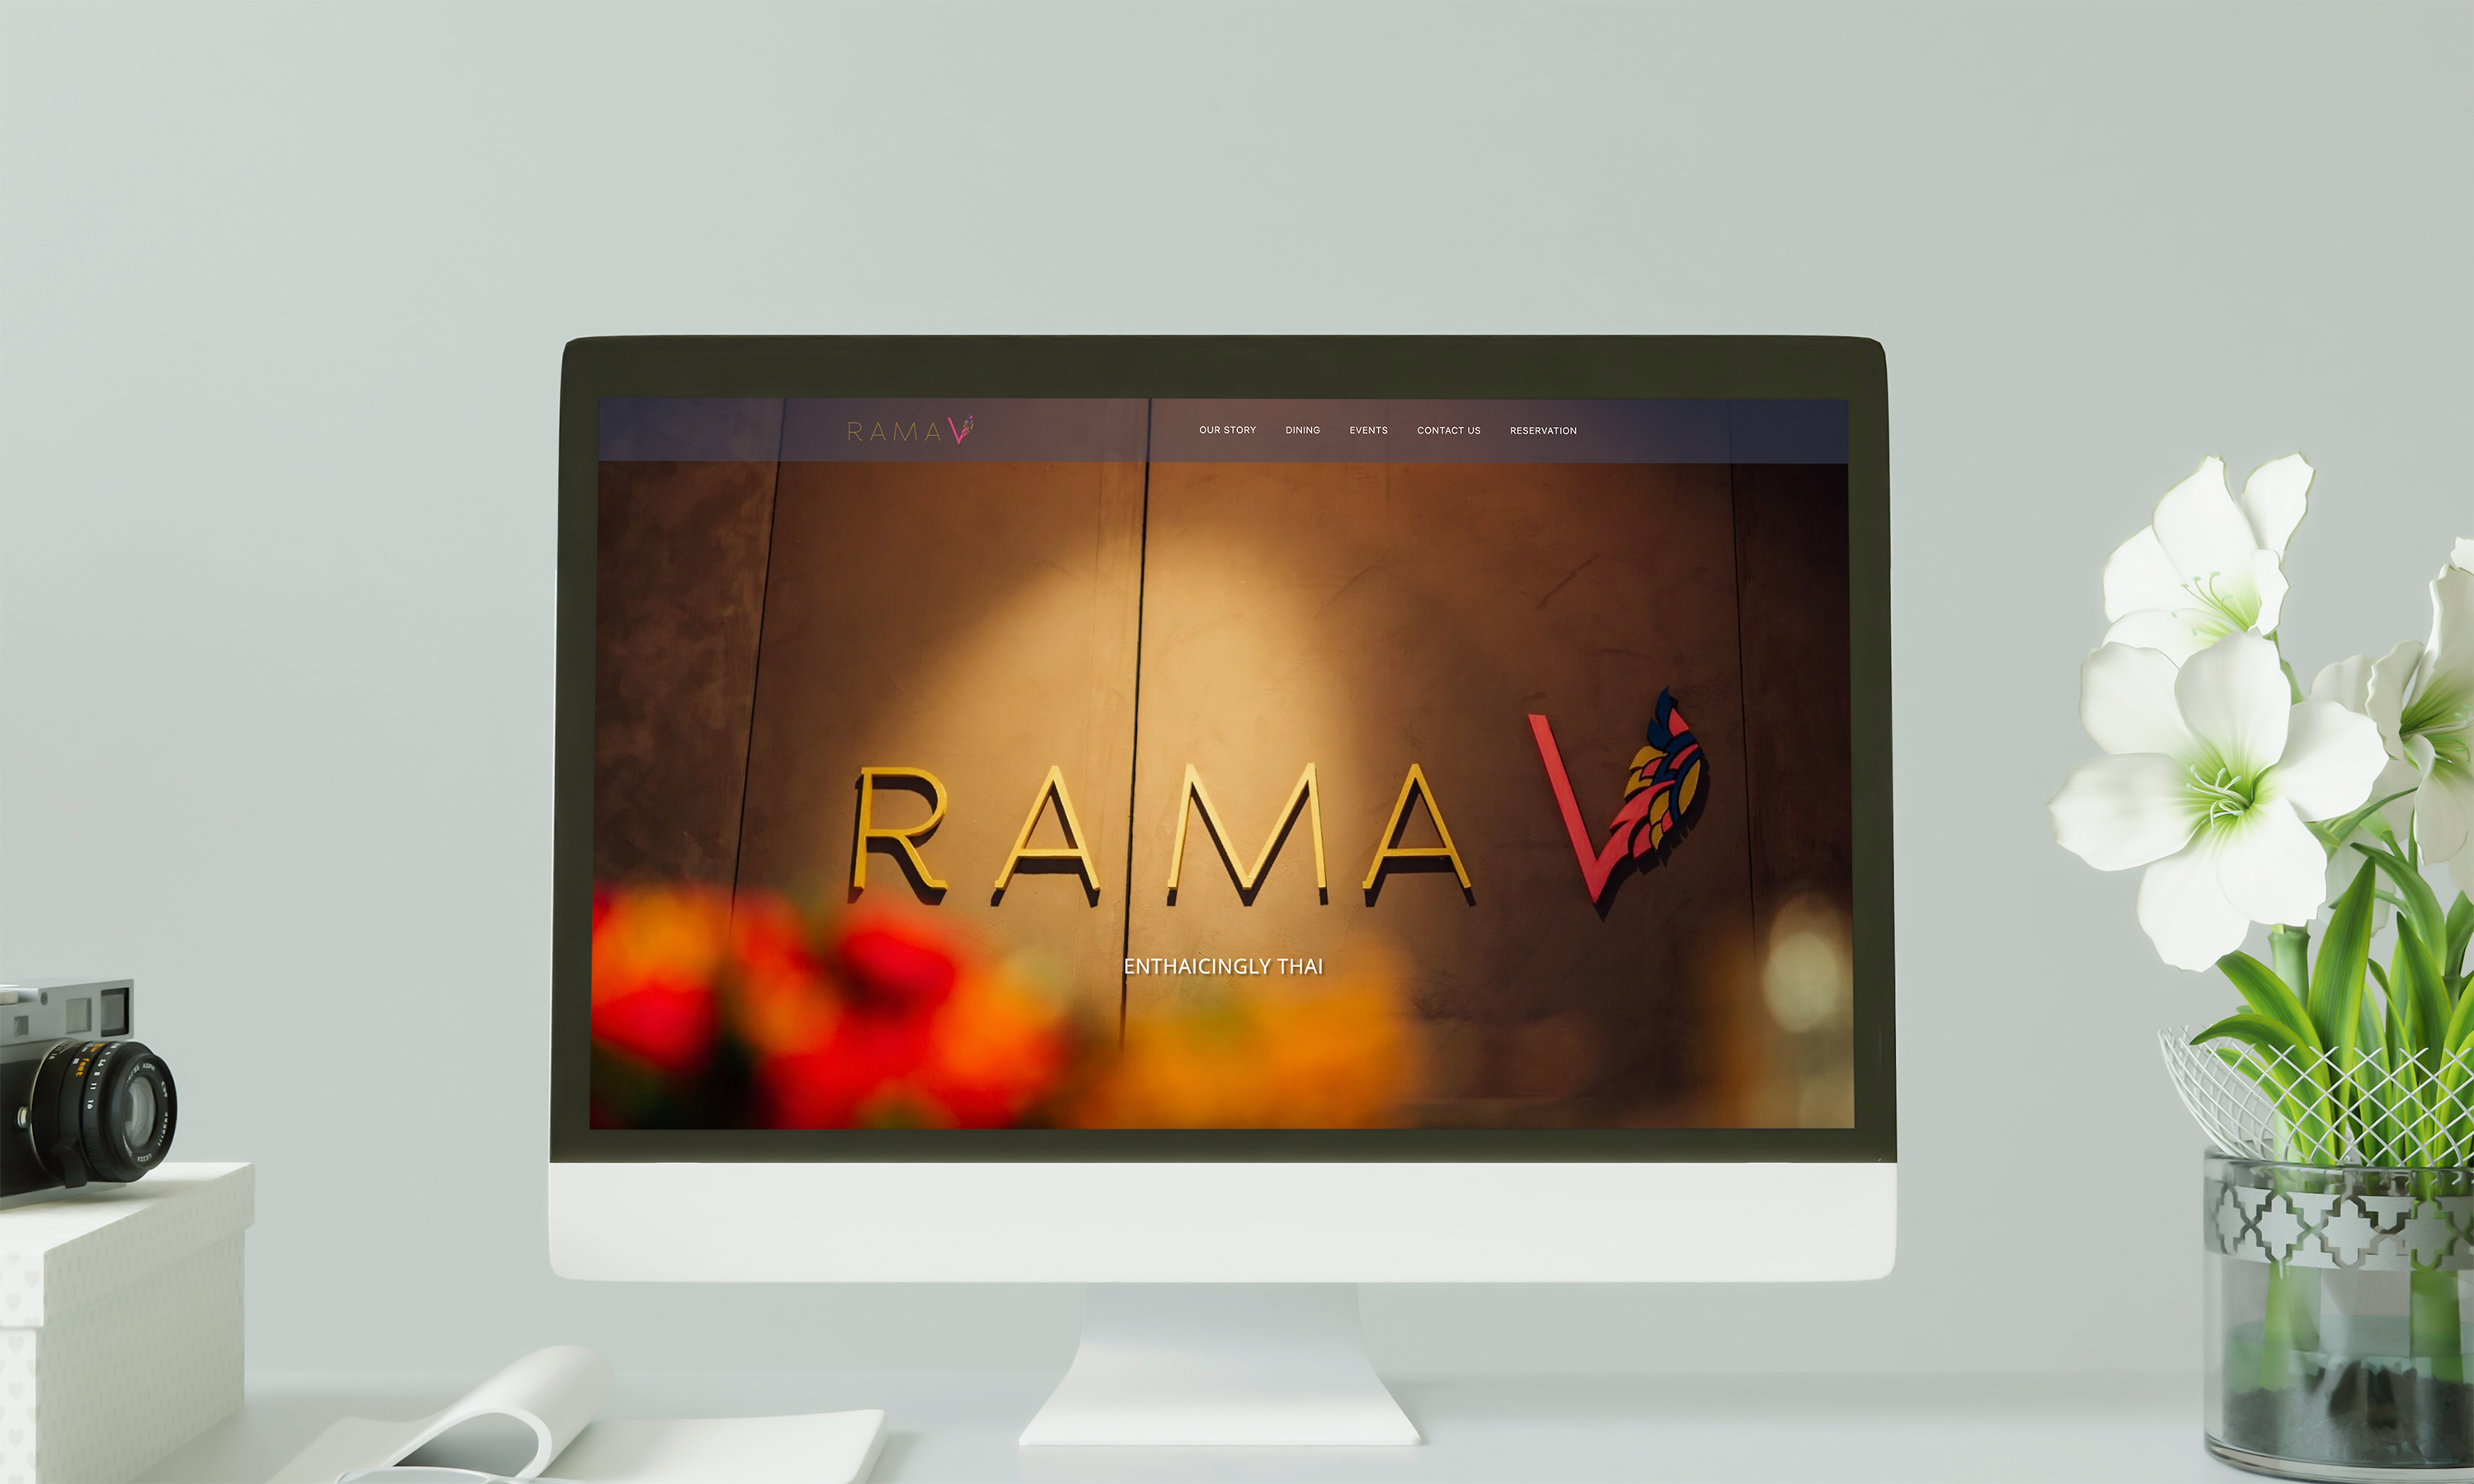 Smart mockup of computer monitor displaying Rama V's website